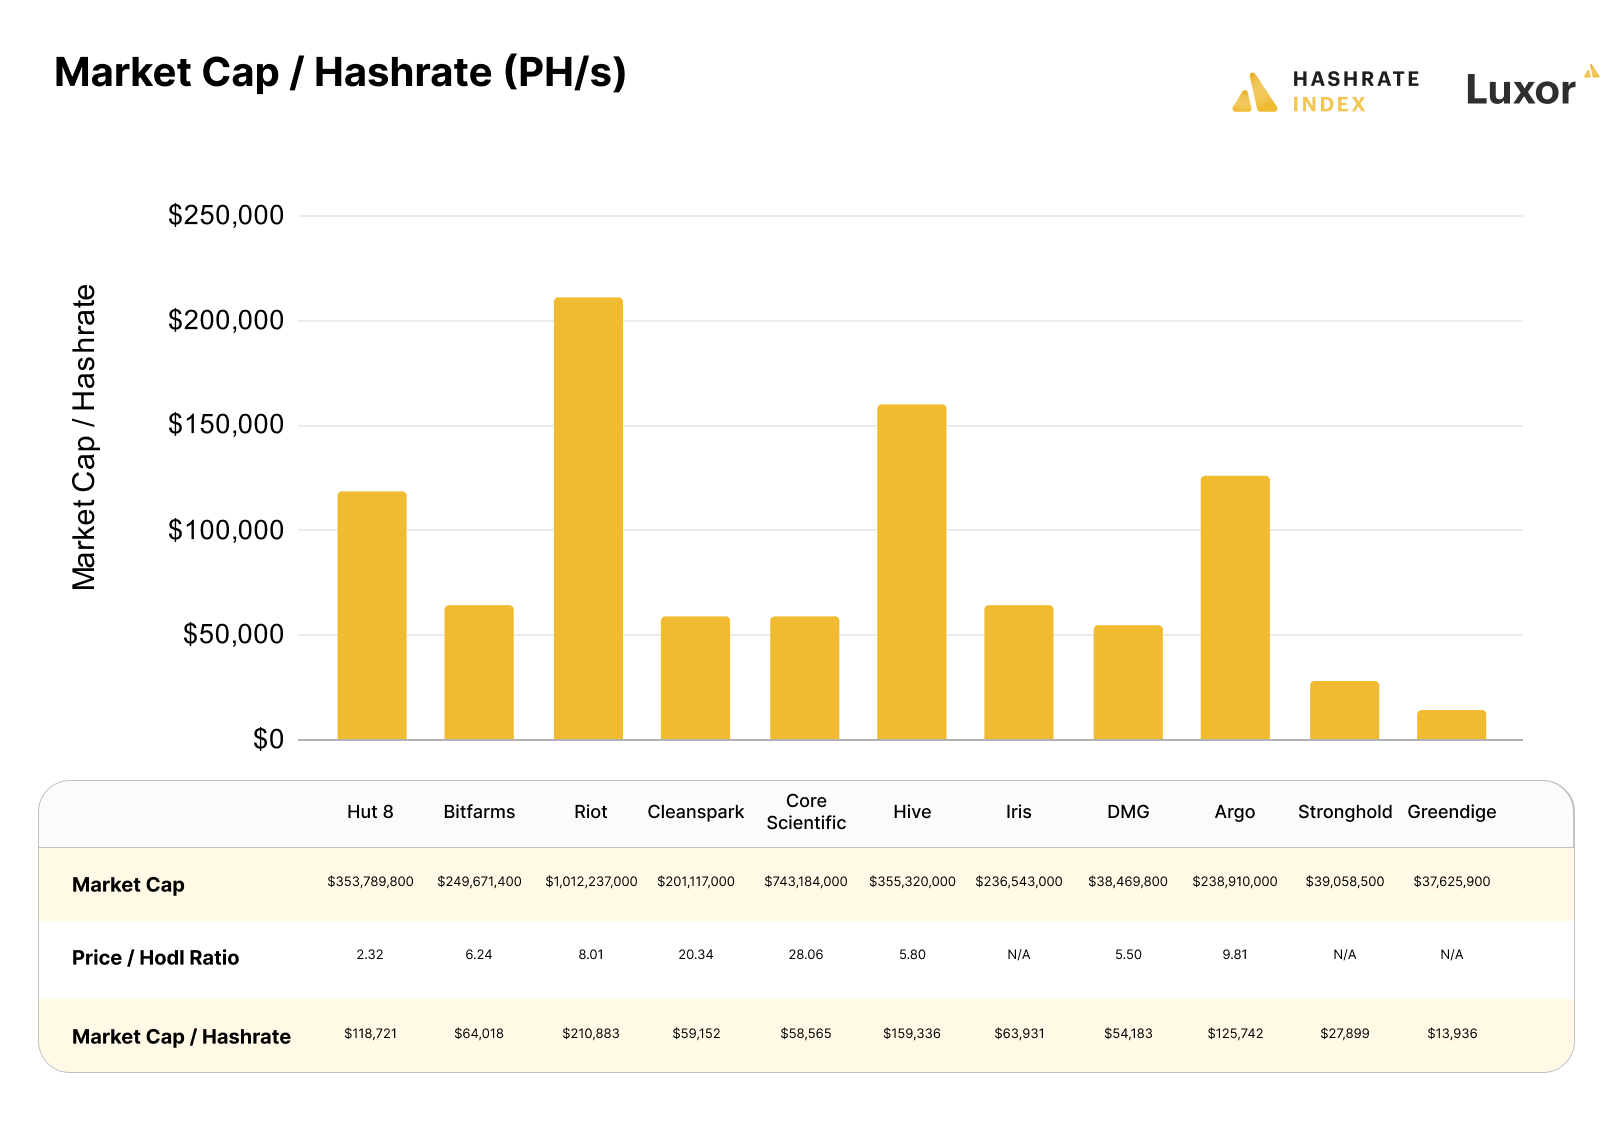 Market cap / hashrate ratio for Bitcoin mining stocks | Source: public disclosures